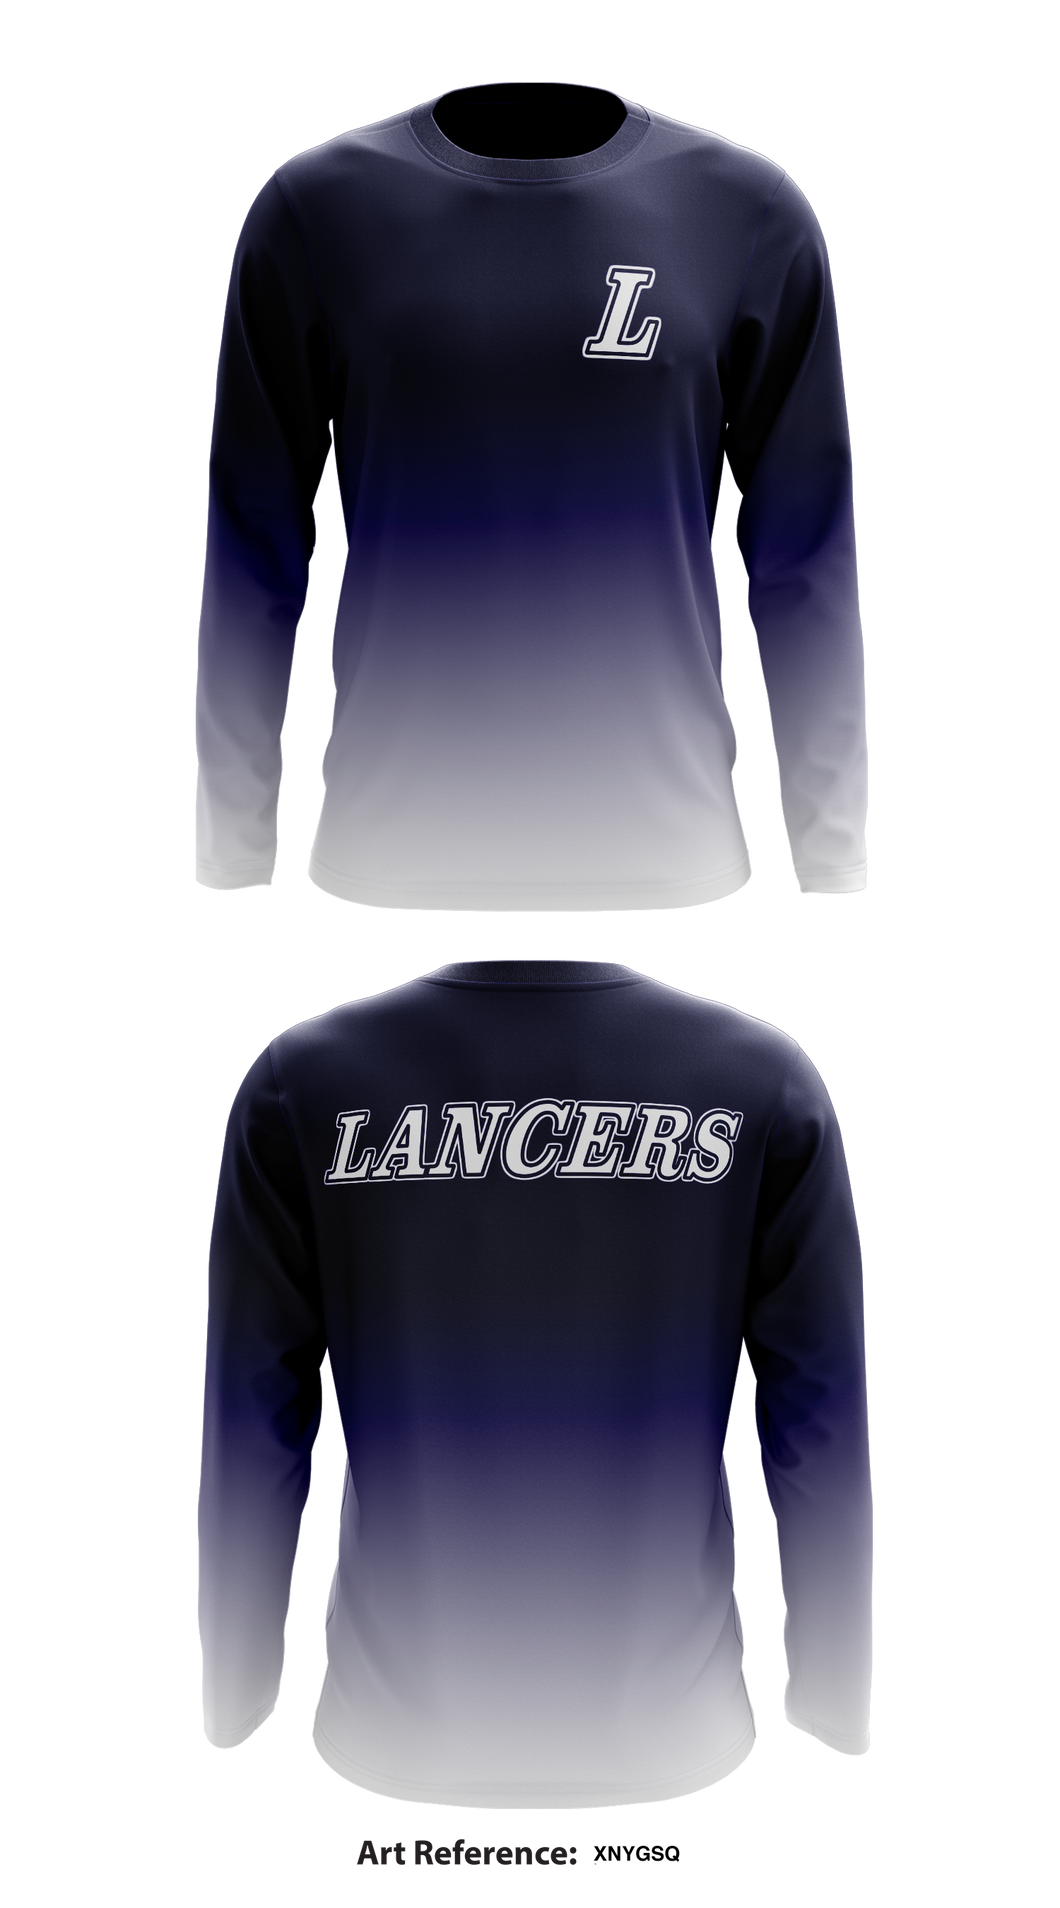 Lancers 43369954 Long Sleeve Performance Shirt - 2